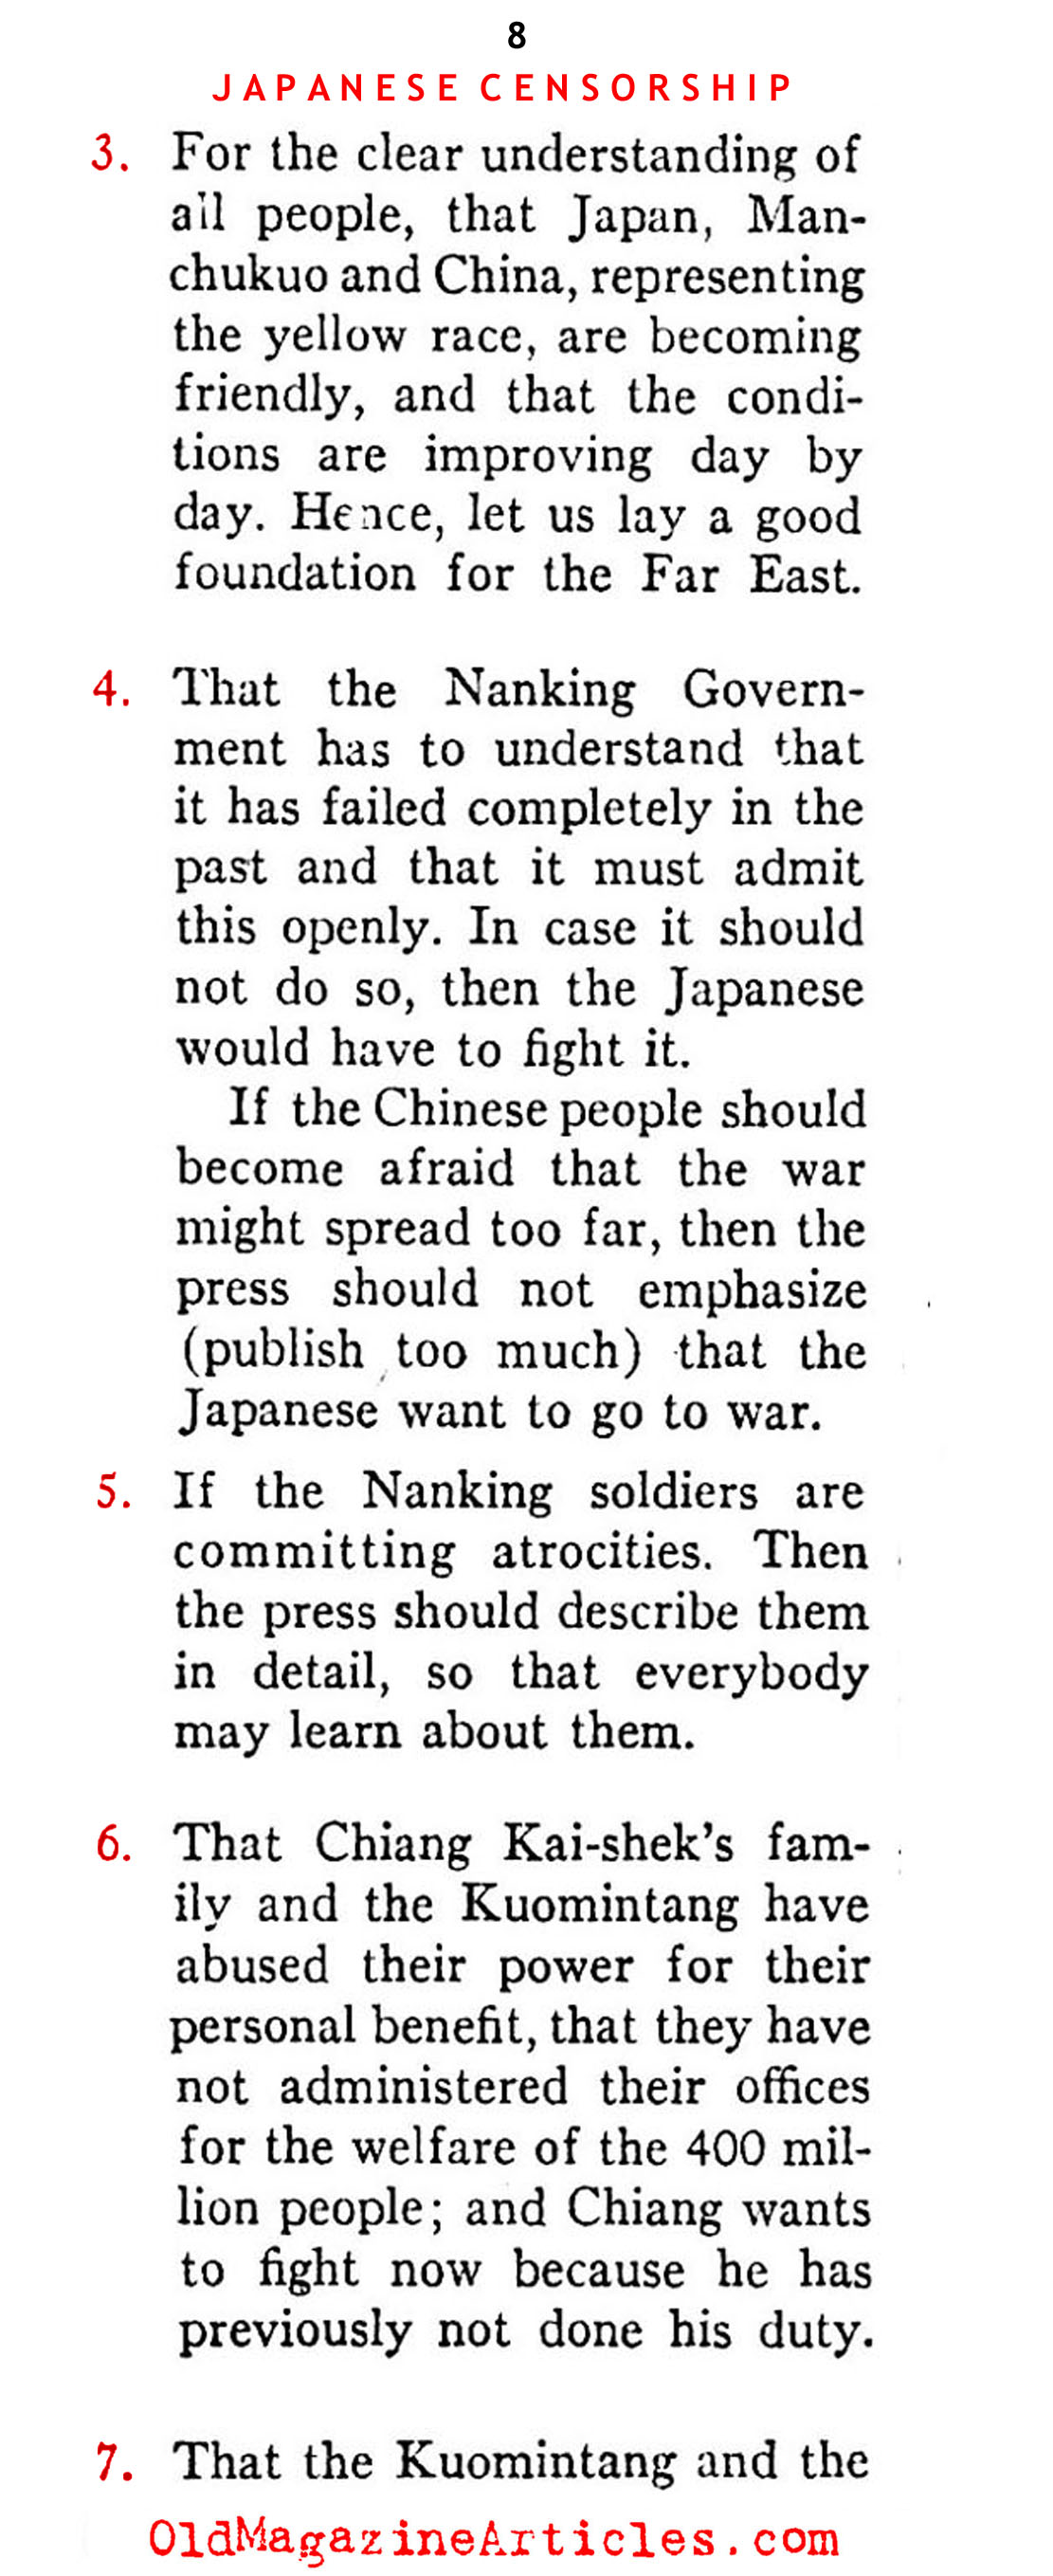 Censors of the Japanese War Machine (Ken Magazine, 1938)